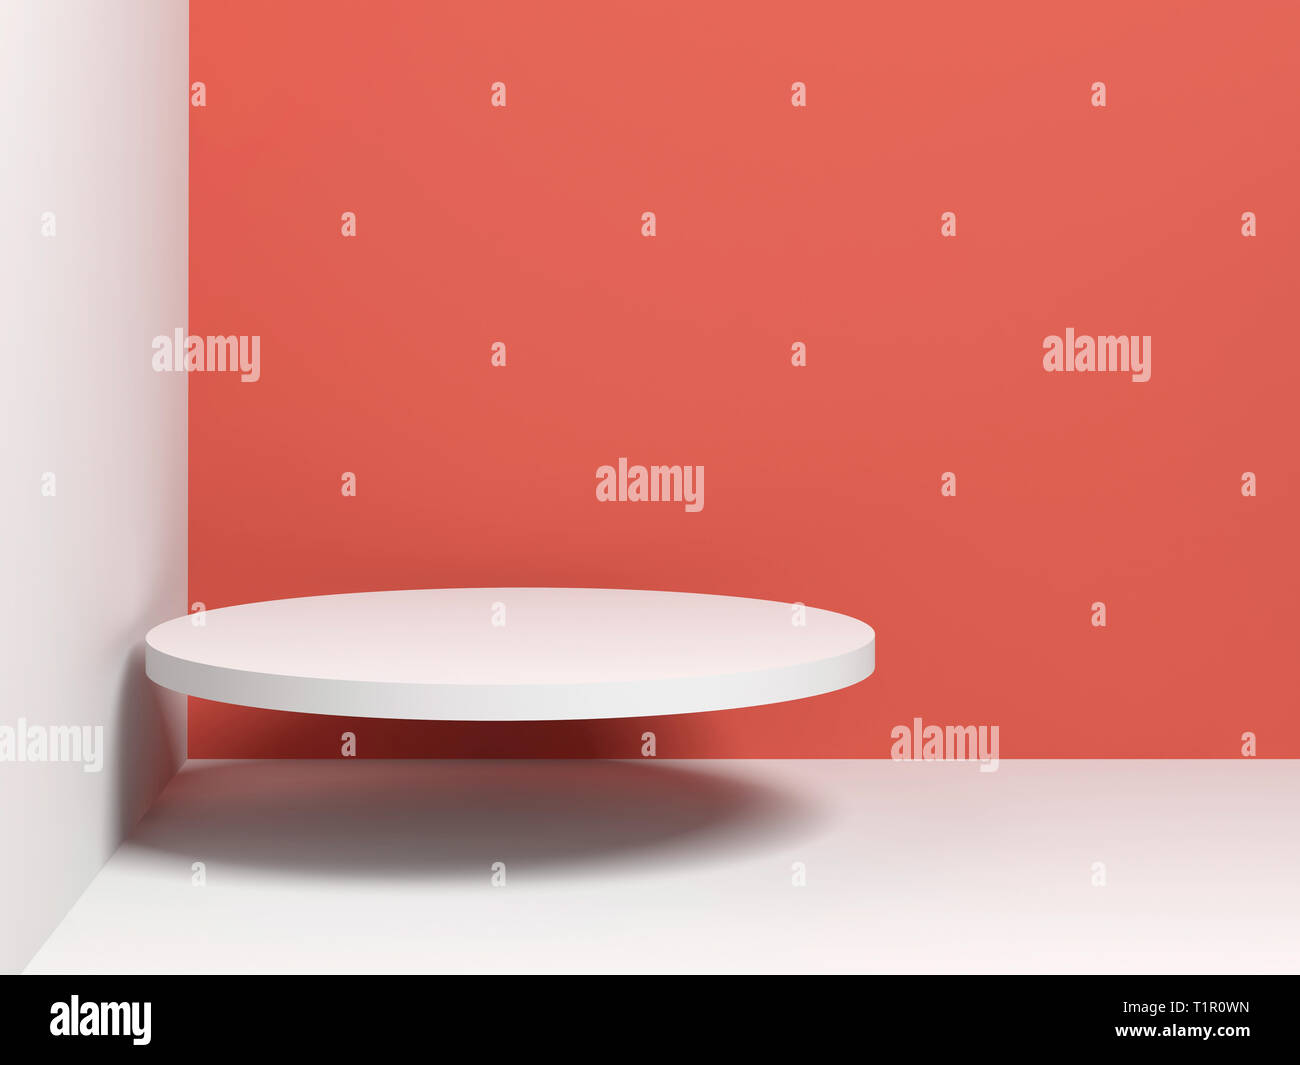 White cylindrical podium object flying in empty room corner, 3d render illustration Stock Photo